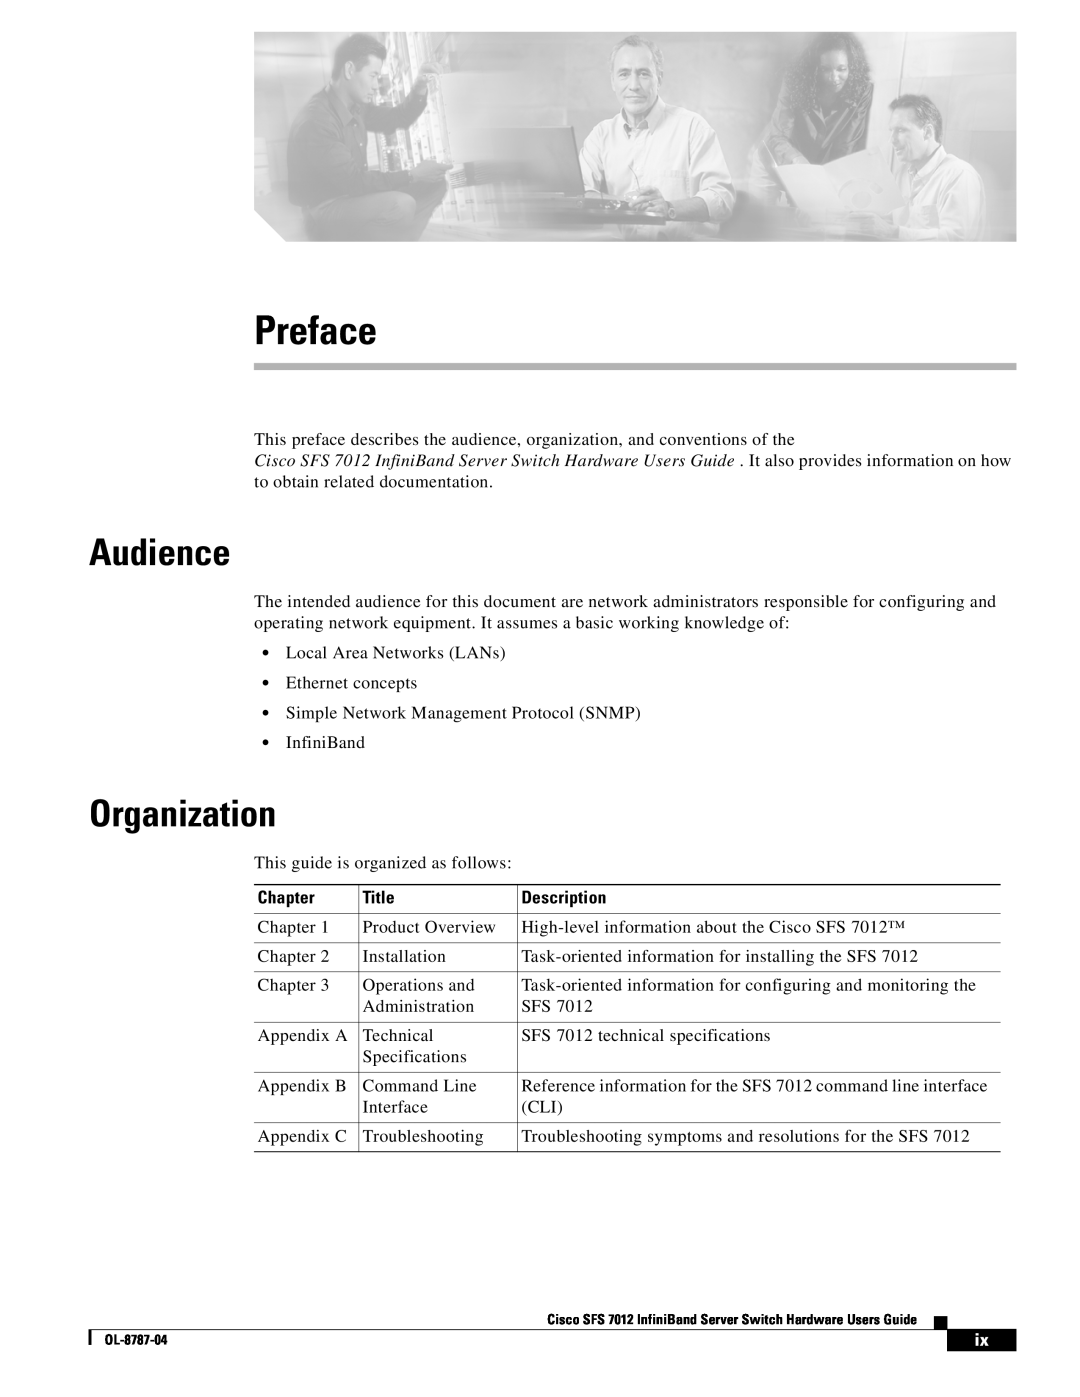 Cisco Systems SFS 7012 manual Preface, Audience, Organization 